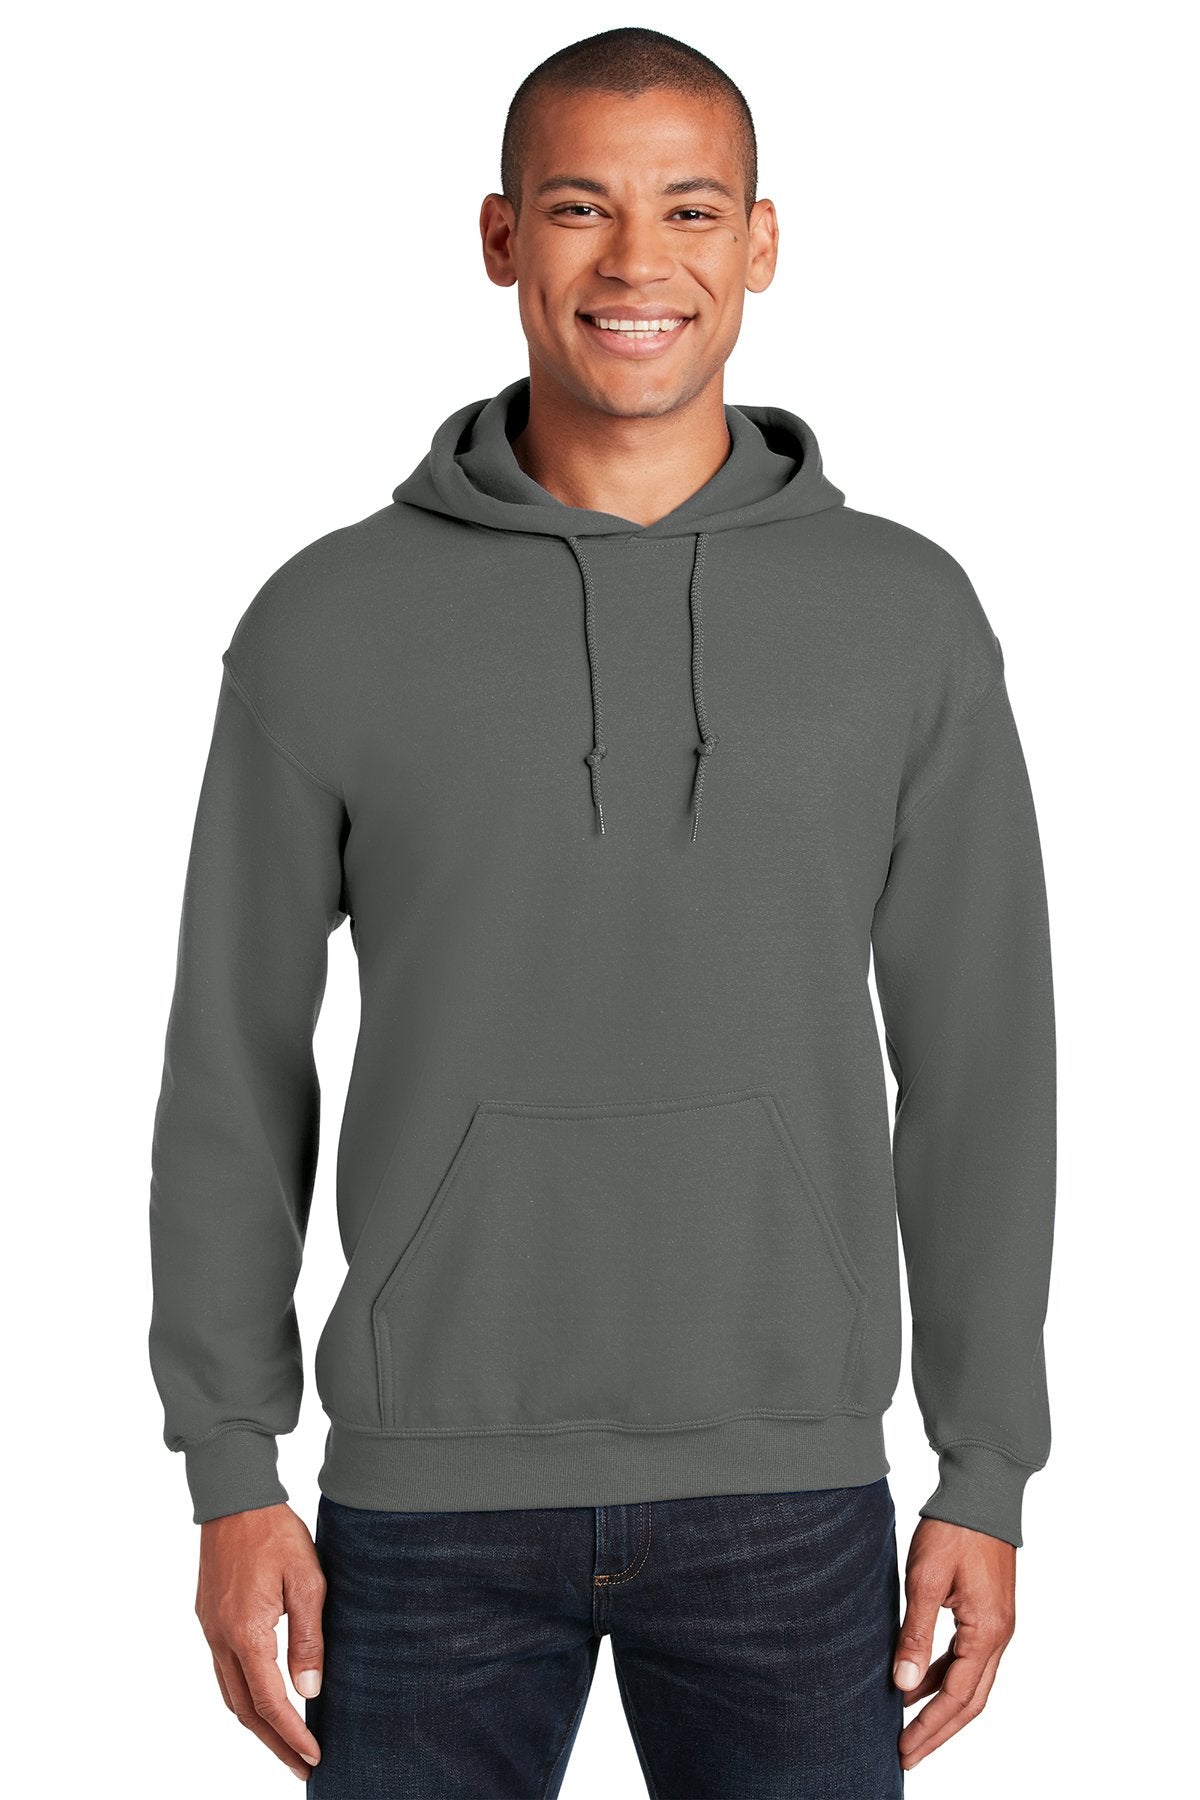 Heavy Gildan Sweatshirt Blend Charcoal Branded Hooded